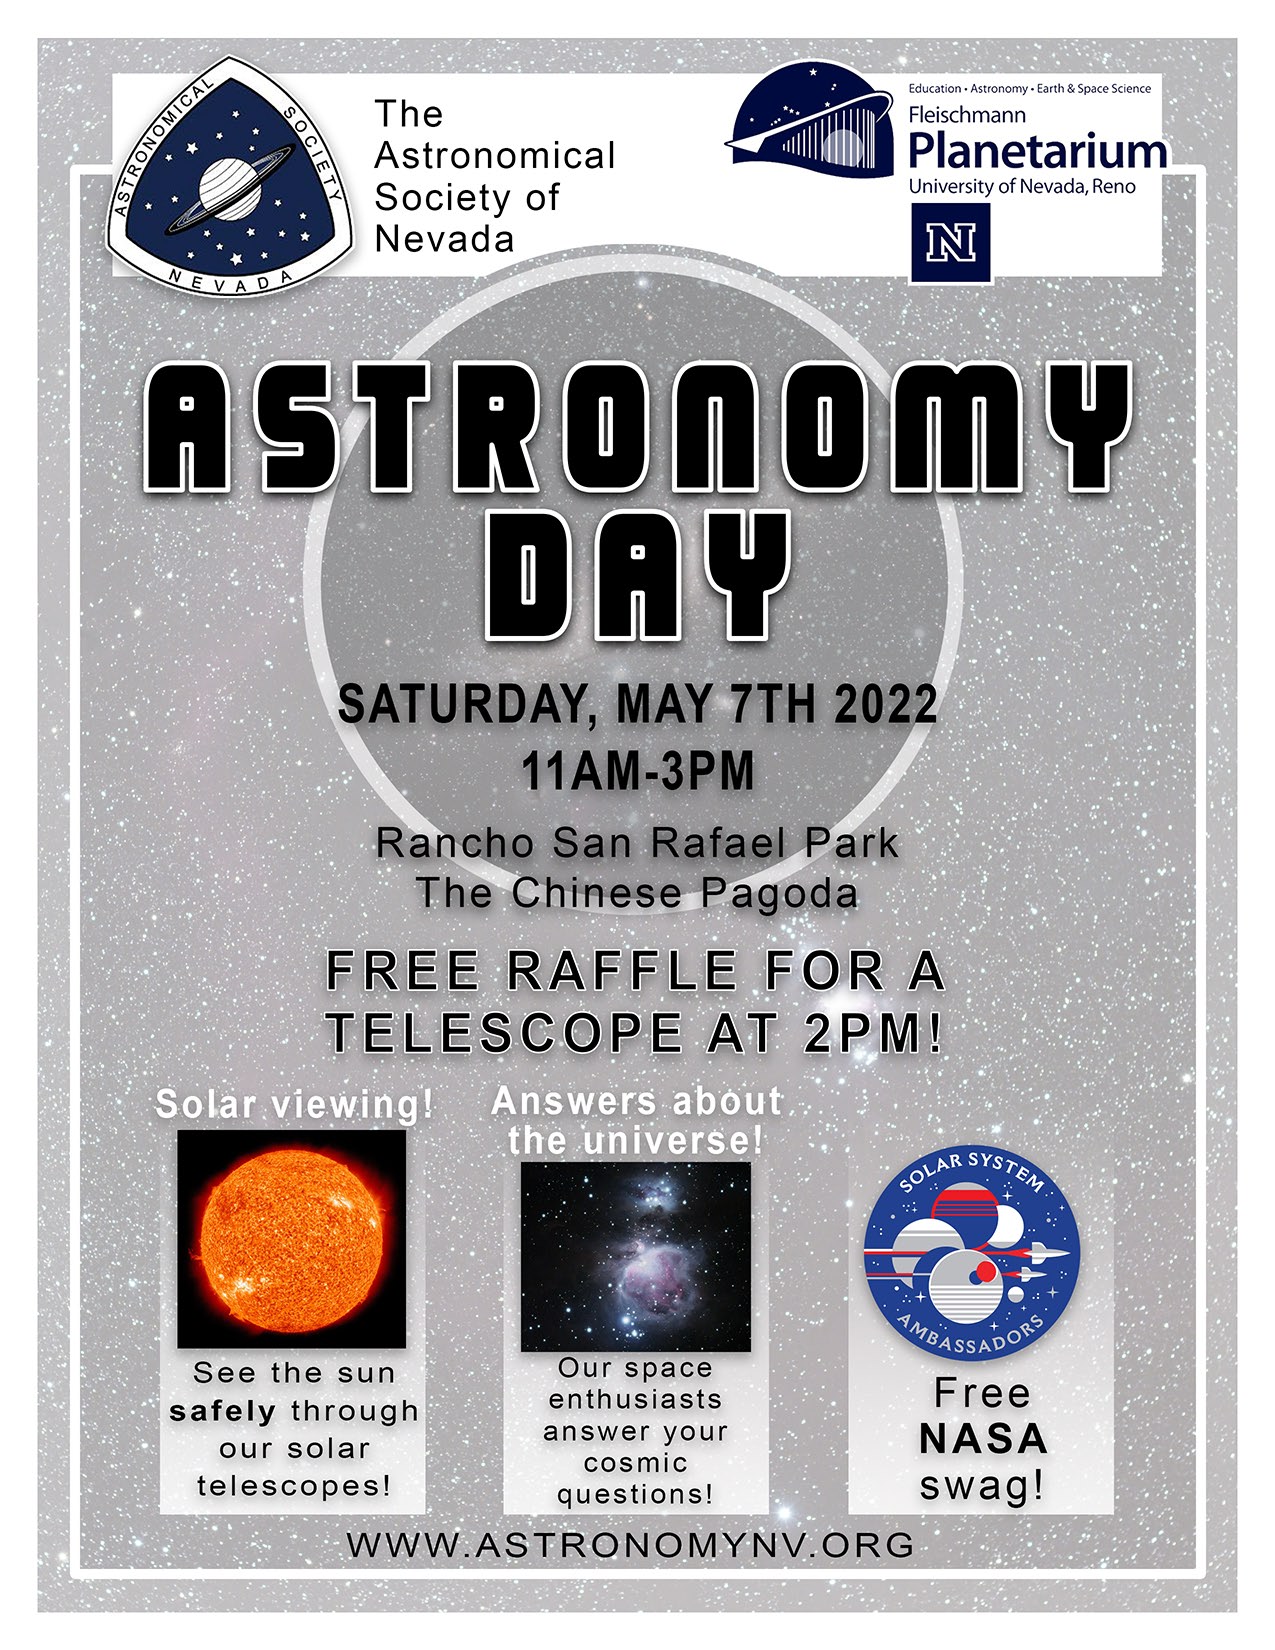 Astronomy Day 2022